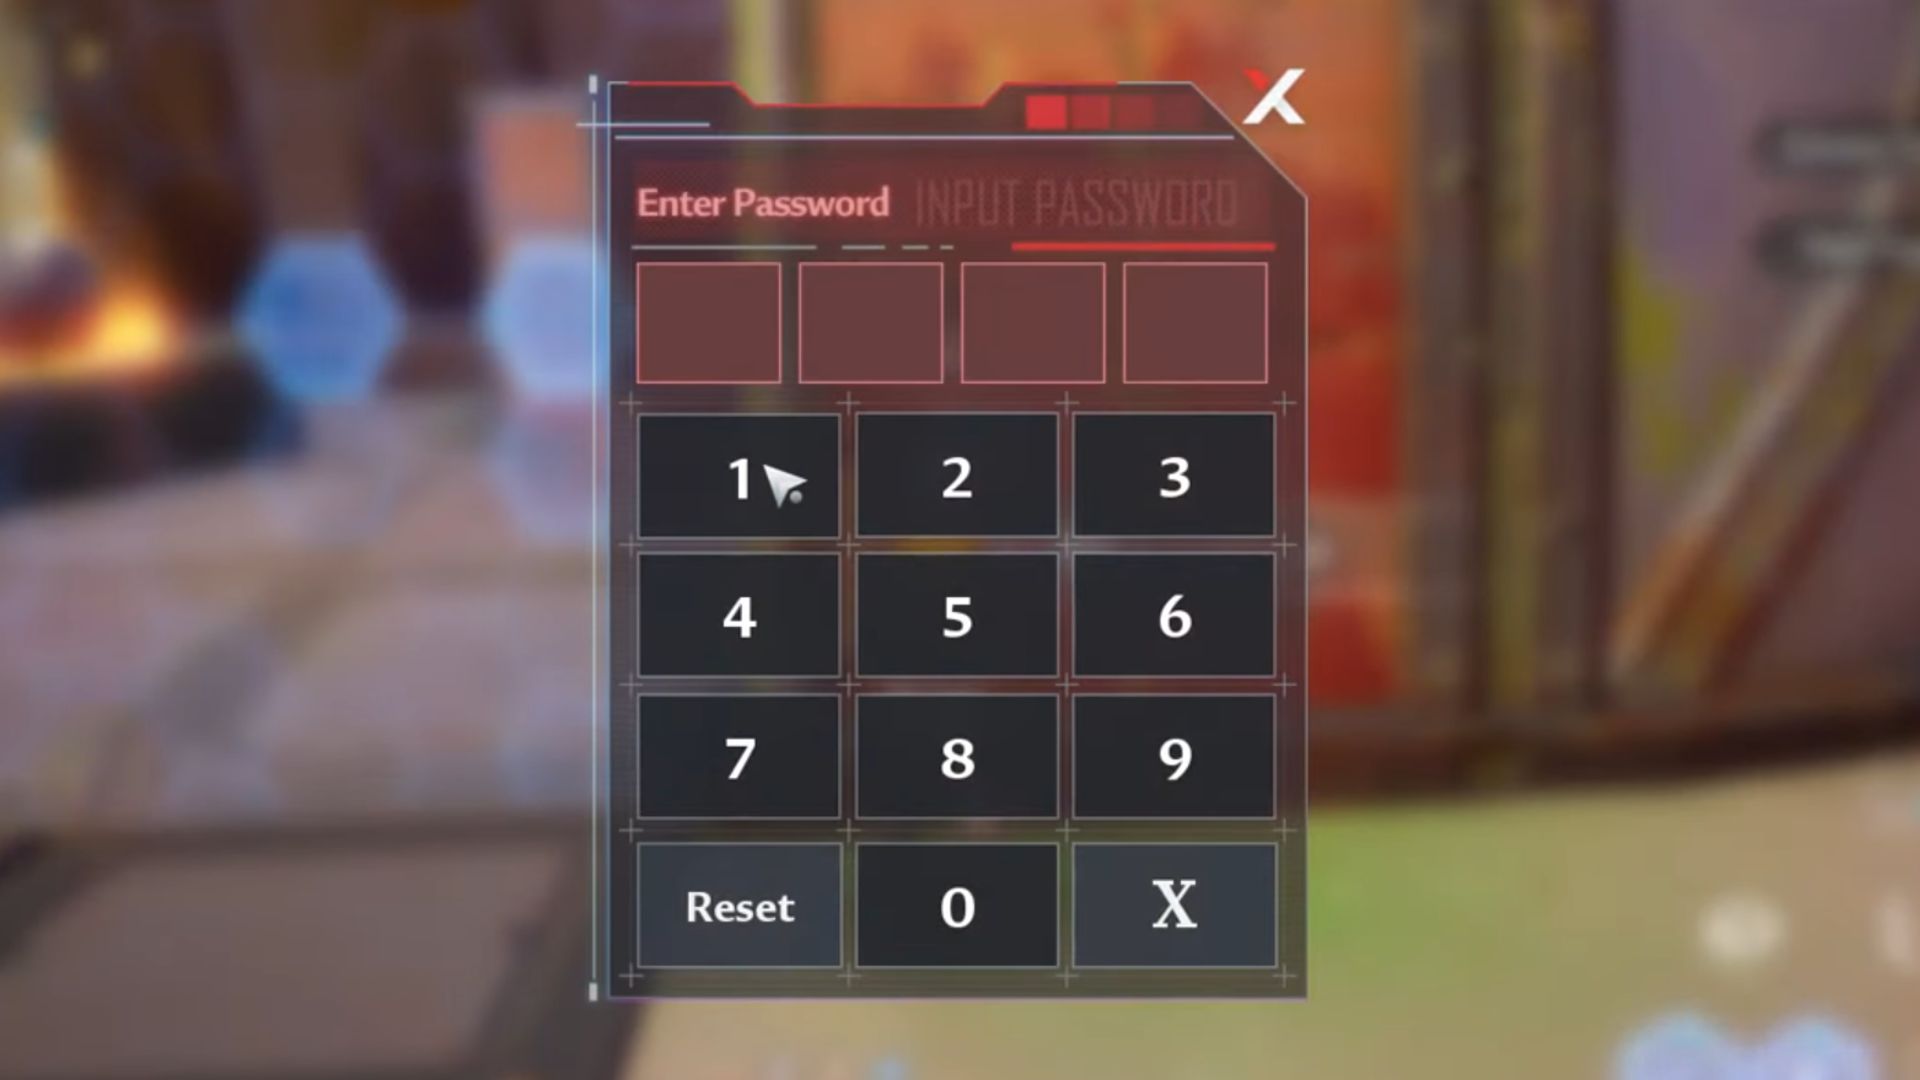 Tower of Fantasy, All Electronic Lock Passwords (Door Codes)